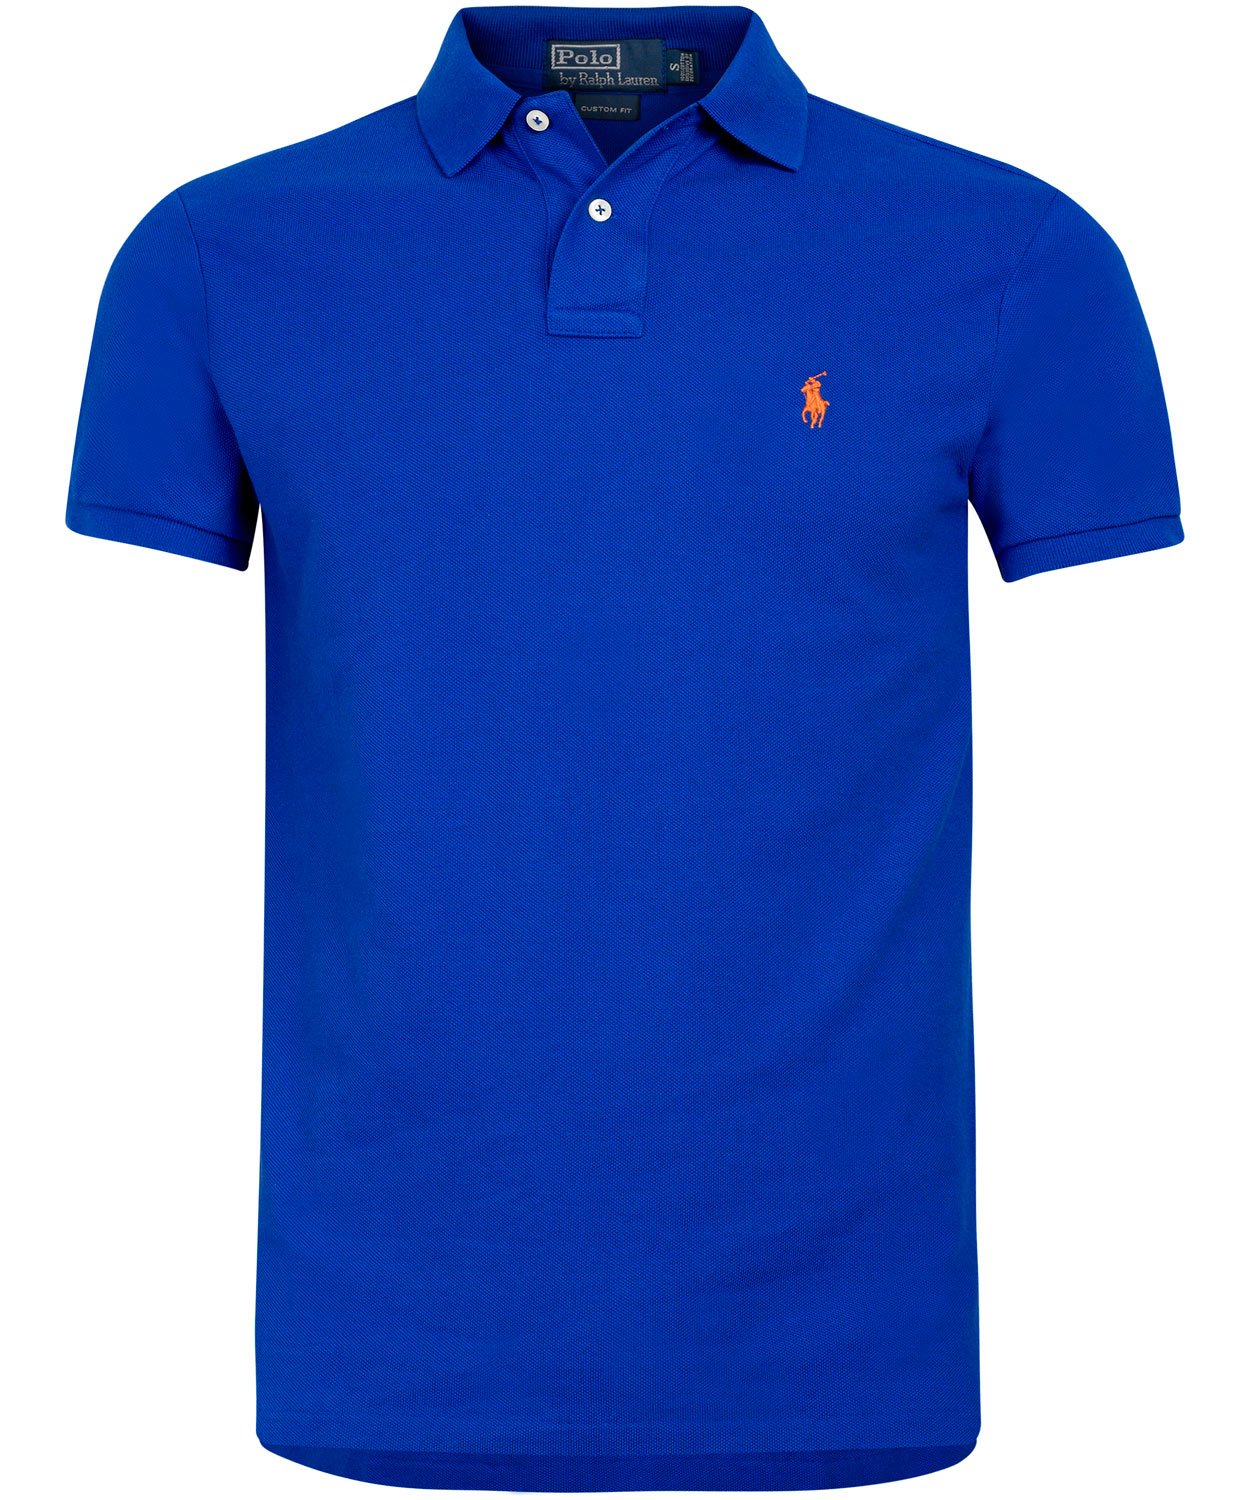 Lyst - Polo ralph lauren Royal Blue Polo Shirt in Blue for Men